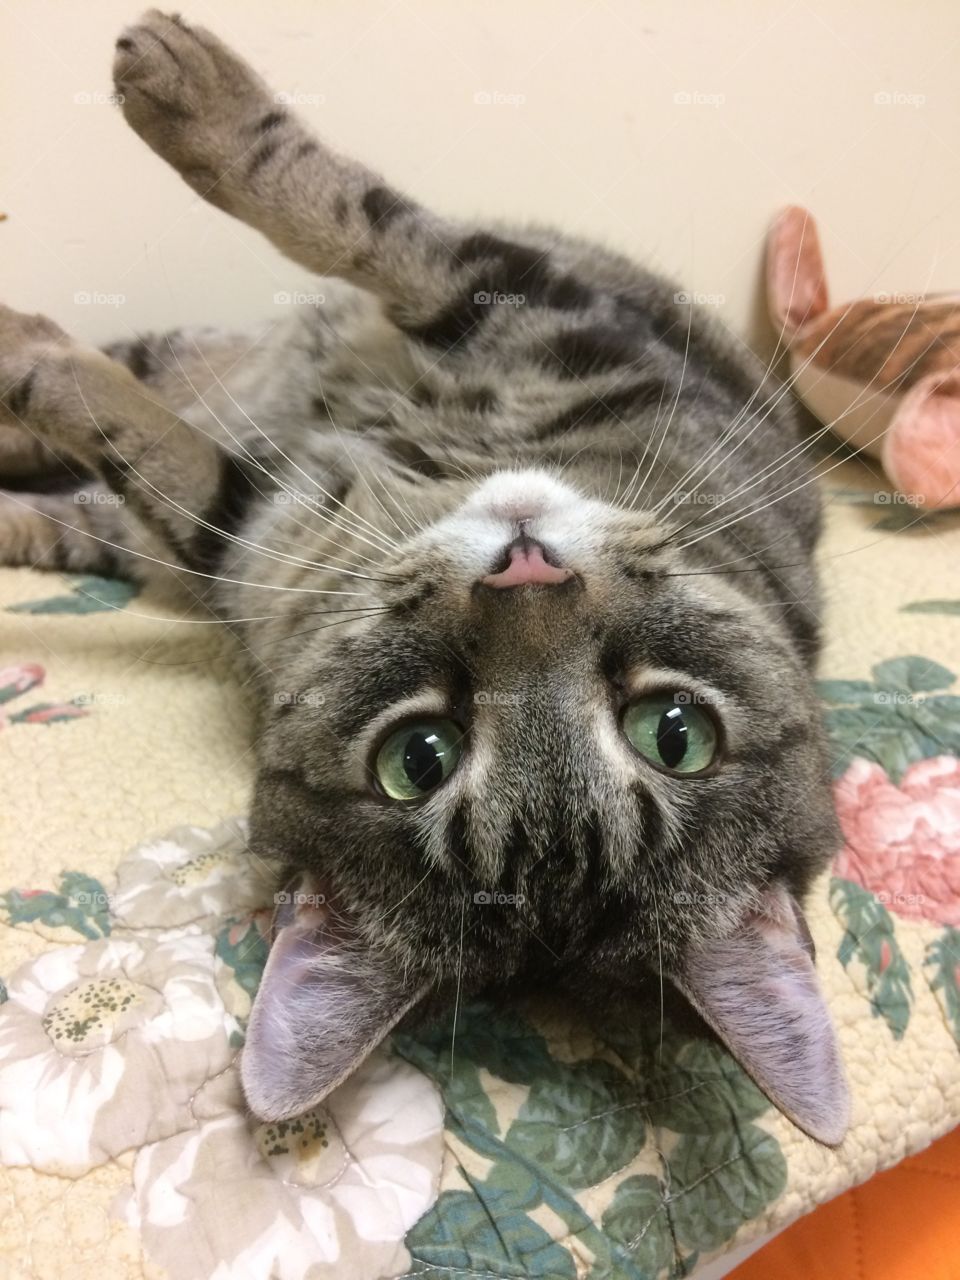 Cute cat upside down romping. 